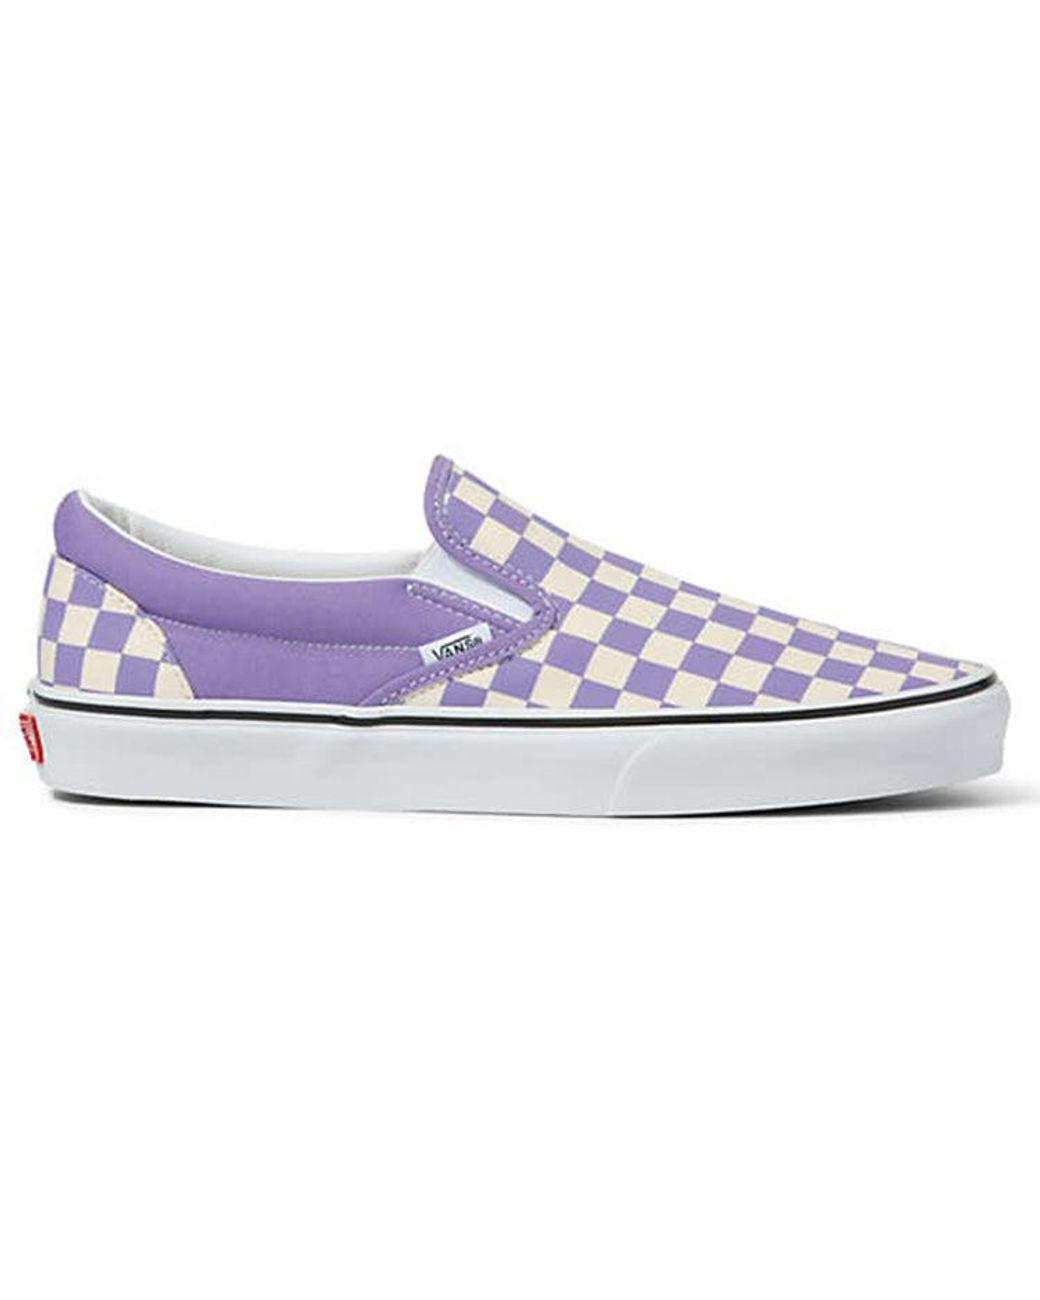 Vans Classic Slip-on Sneakers White/purple | Lyst